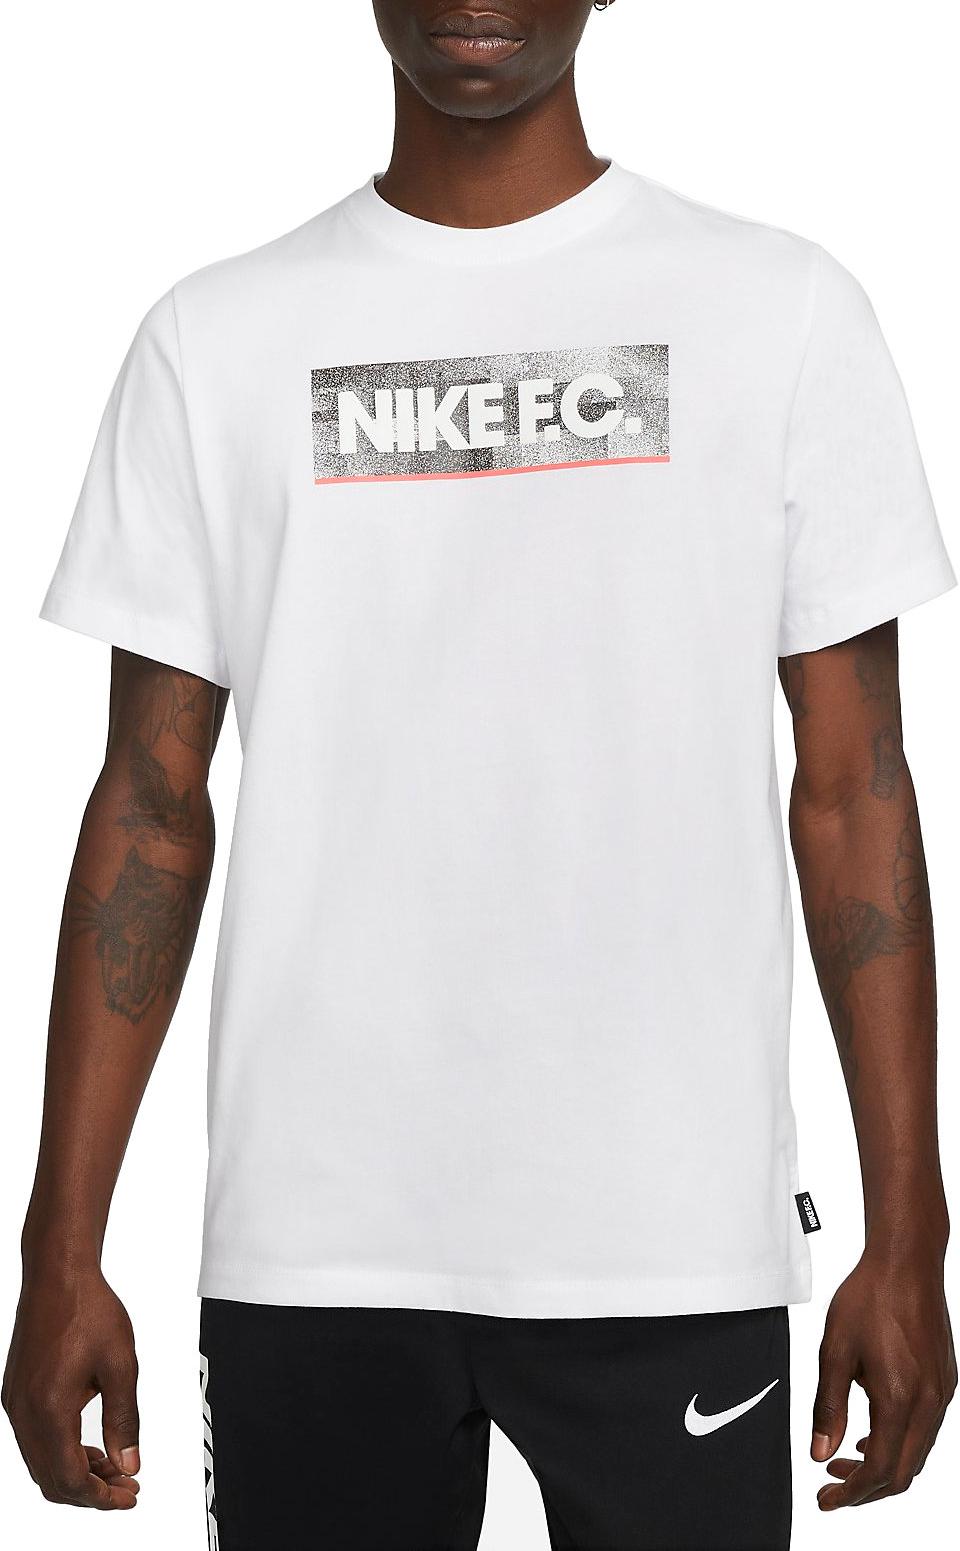 Nebu gebonden telescoop Nike F.C. T-Shirt - Top4Football.com